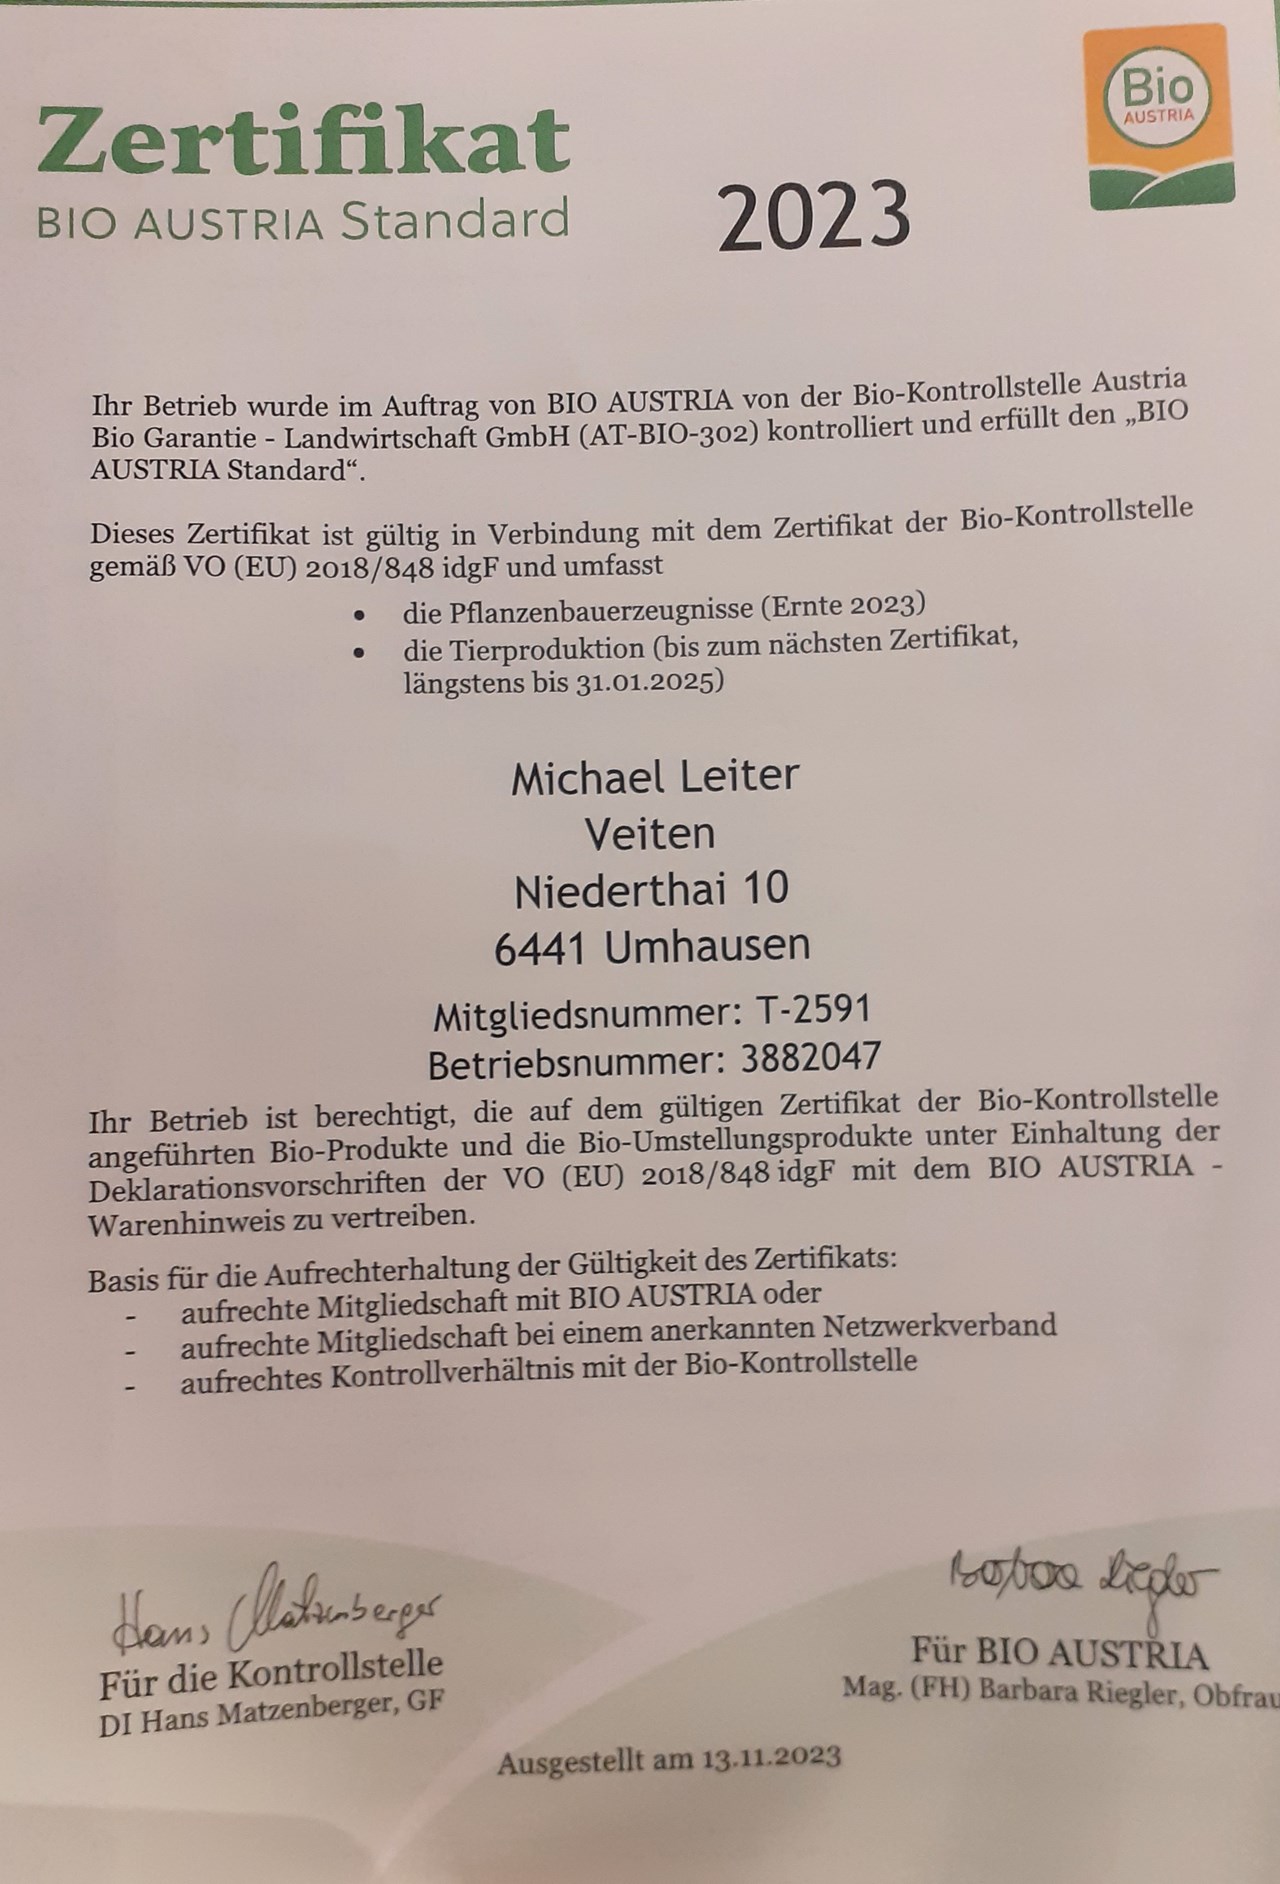 Bio & Reiterhof der Veitenhof Evidence certificates Organic Austria certificate